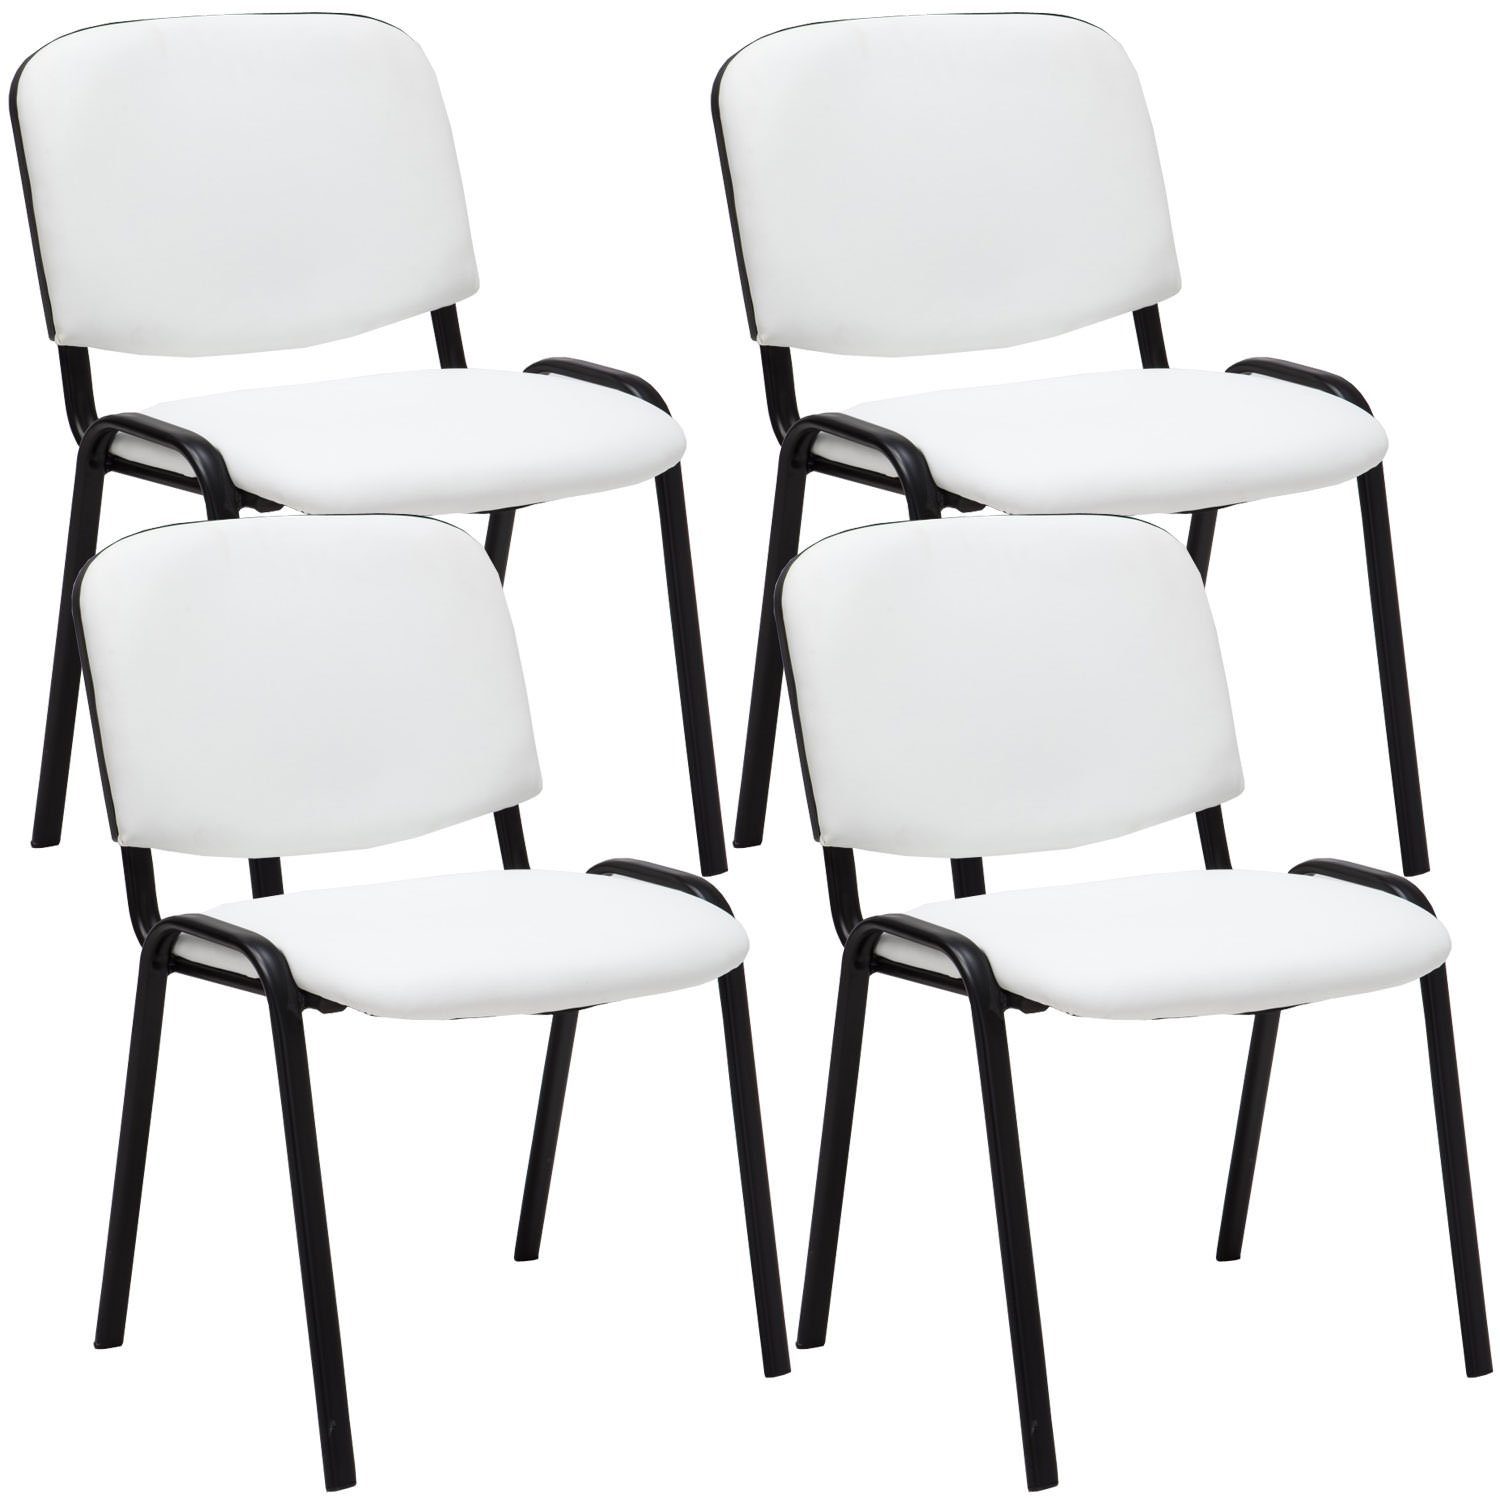 - Keen mit - 4 Sitzfläche: Metall matt schwarz TPFLiving hochwertiger Konferenzstuhl - St), Kunstleder - Warteraumstuhl Messestuhl, Polsterung Besucherstuhl Gestell: weiß (Besprechungsstuhl